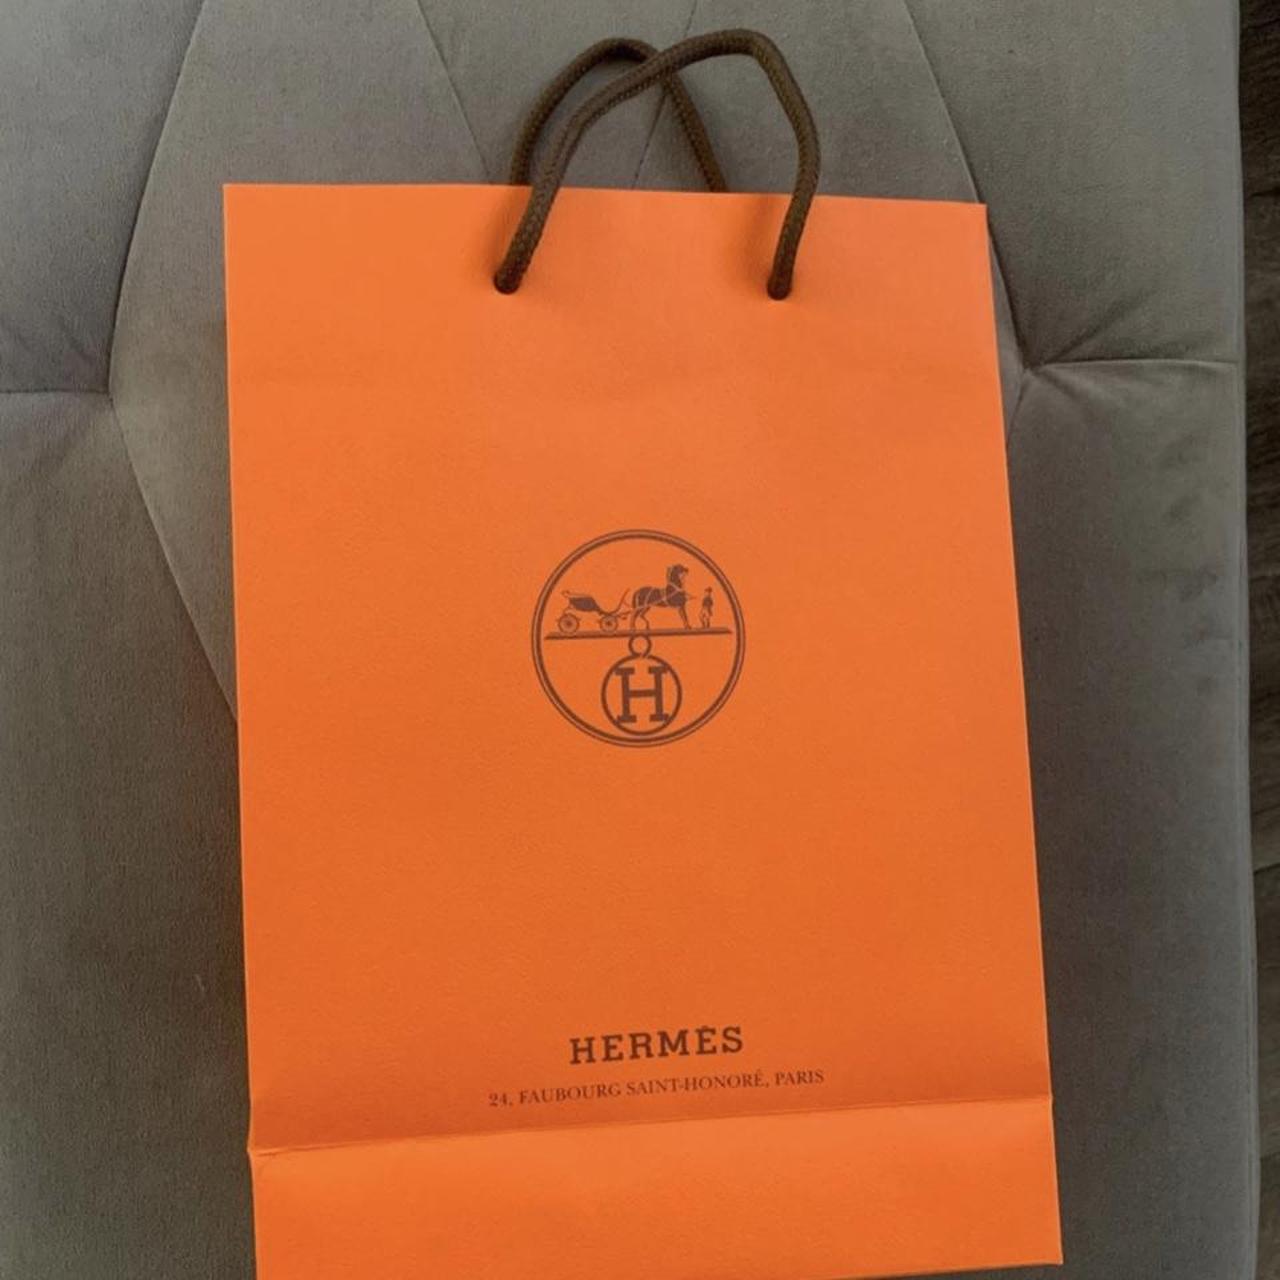 Hermes tall shopping bag Like new condition. Taller... - Depop